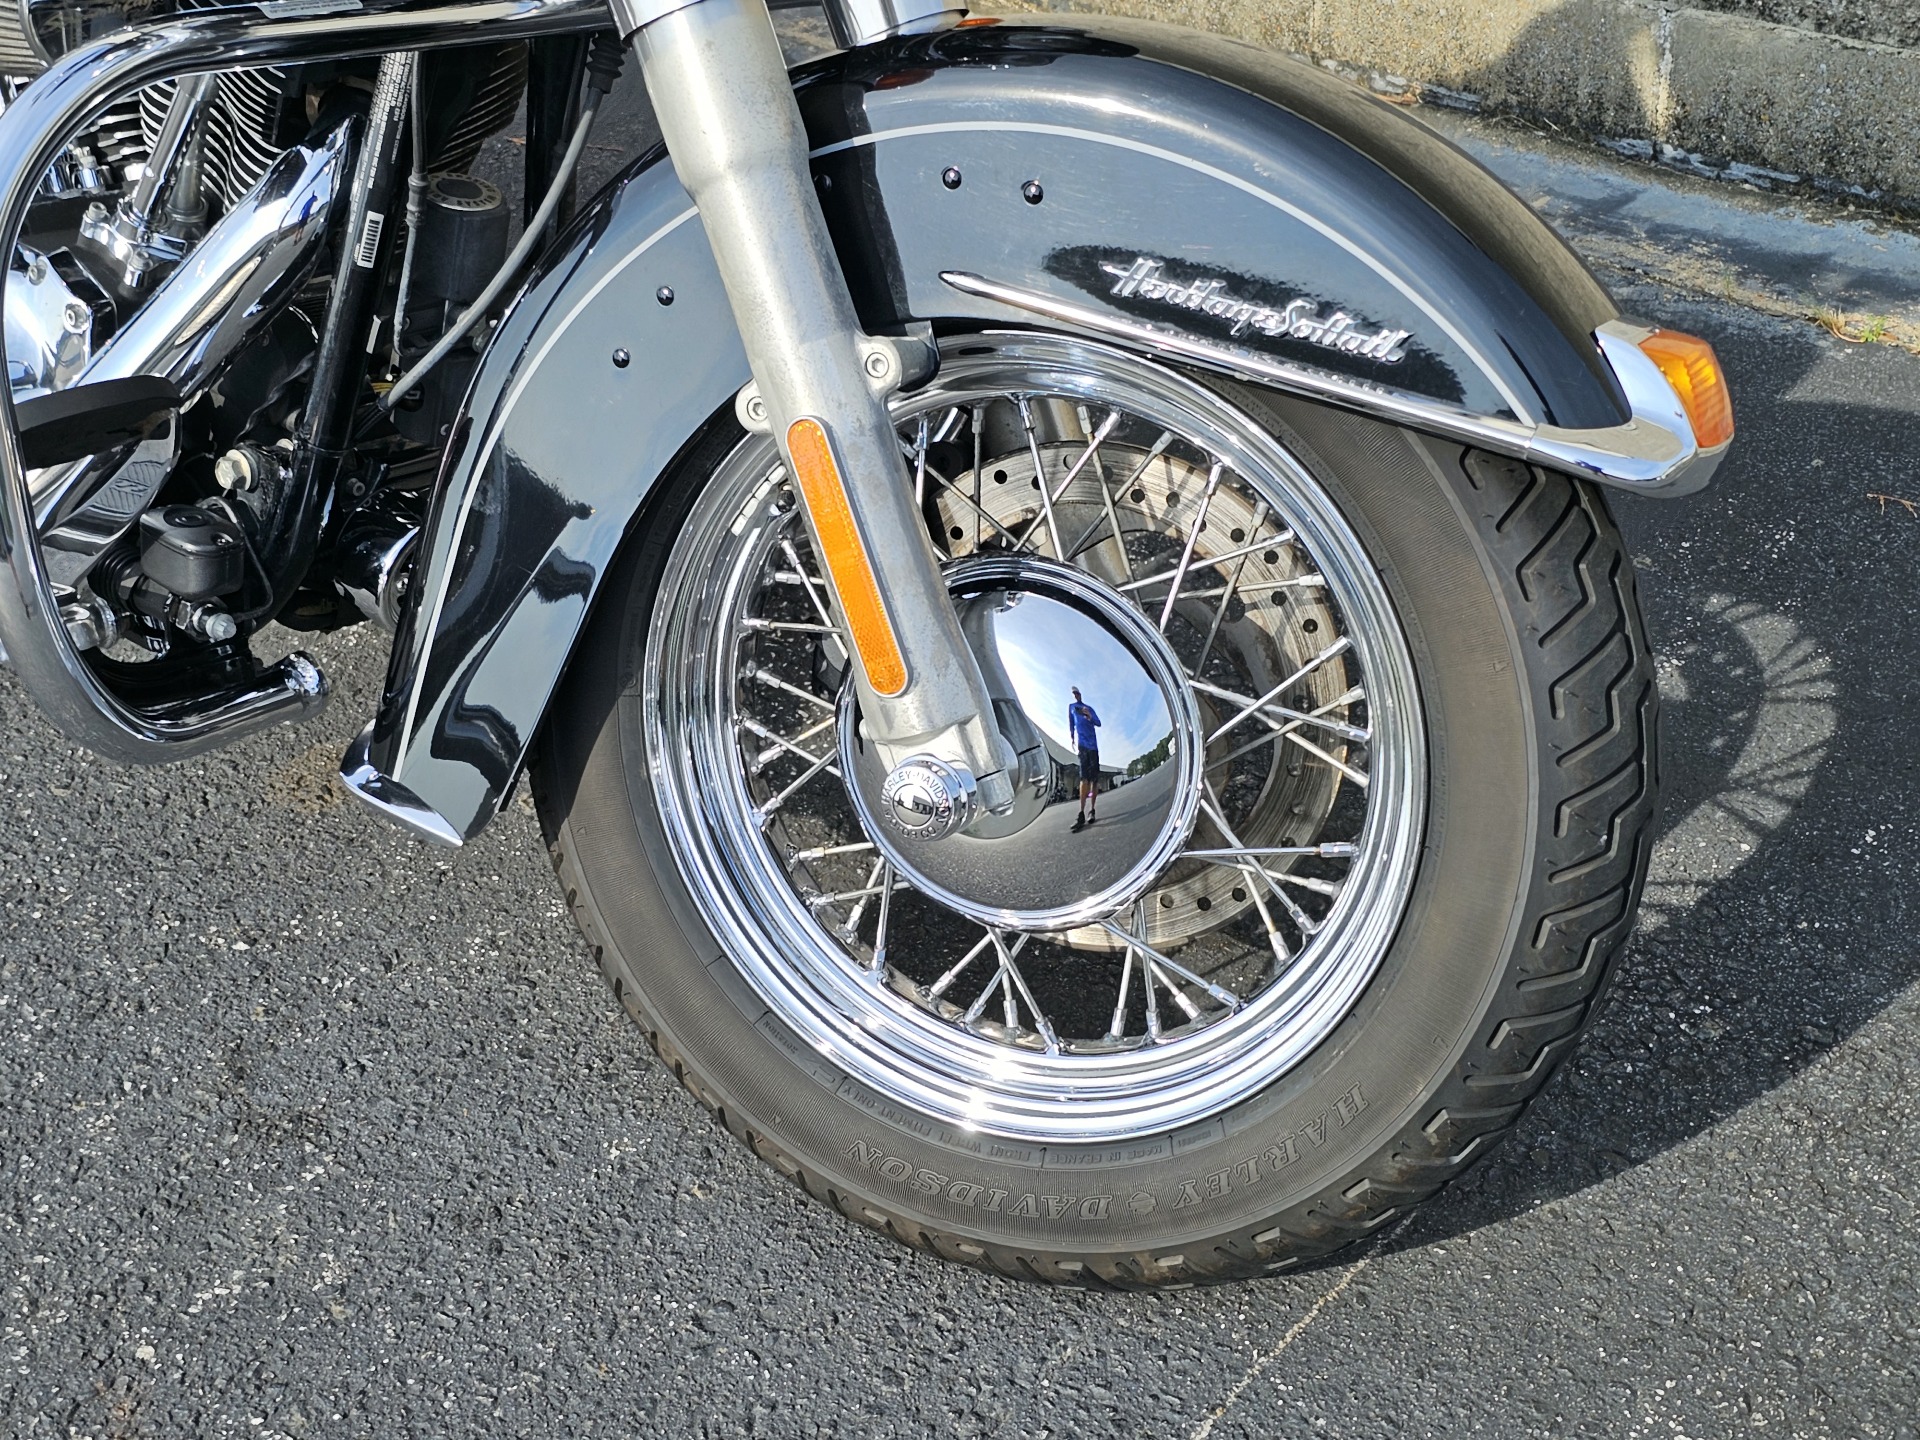 2015 Harley-Davidson Heritage Softail® Classic in Columbus, Georgia - Photo 6